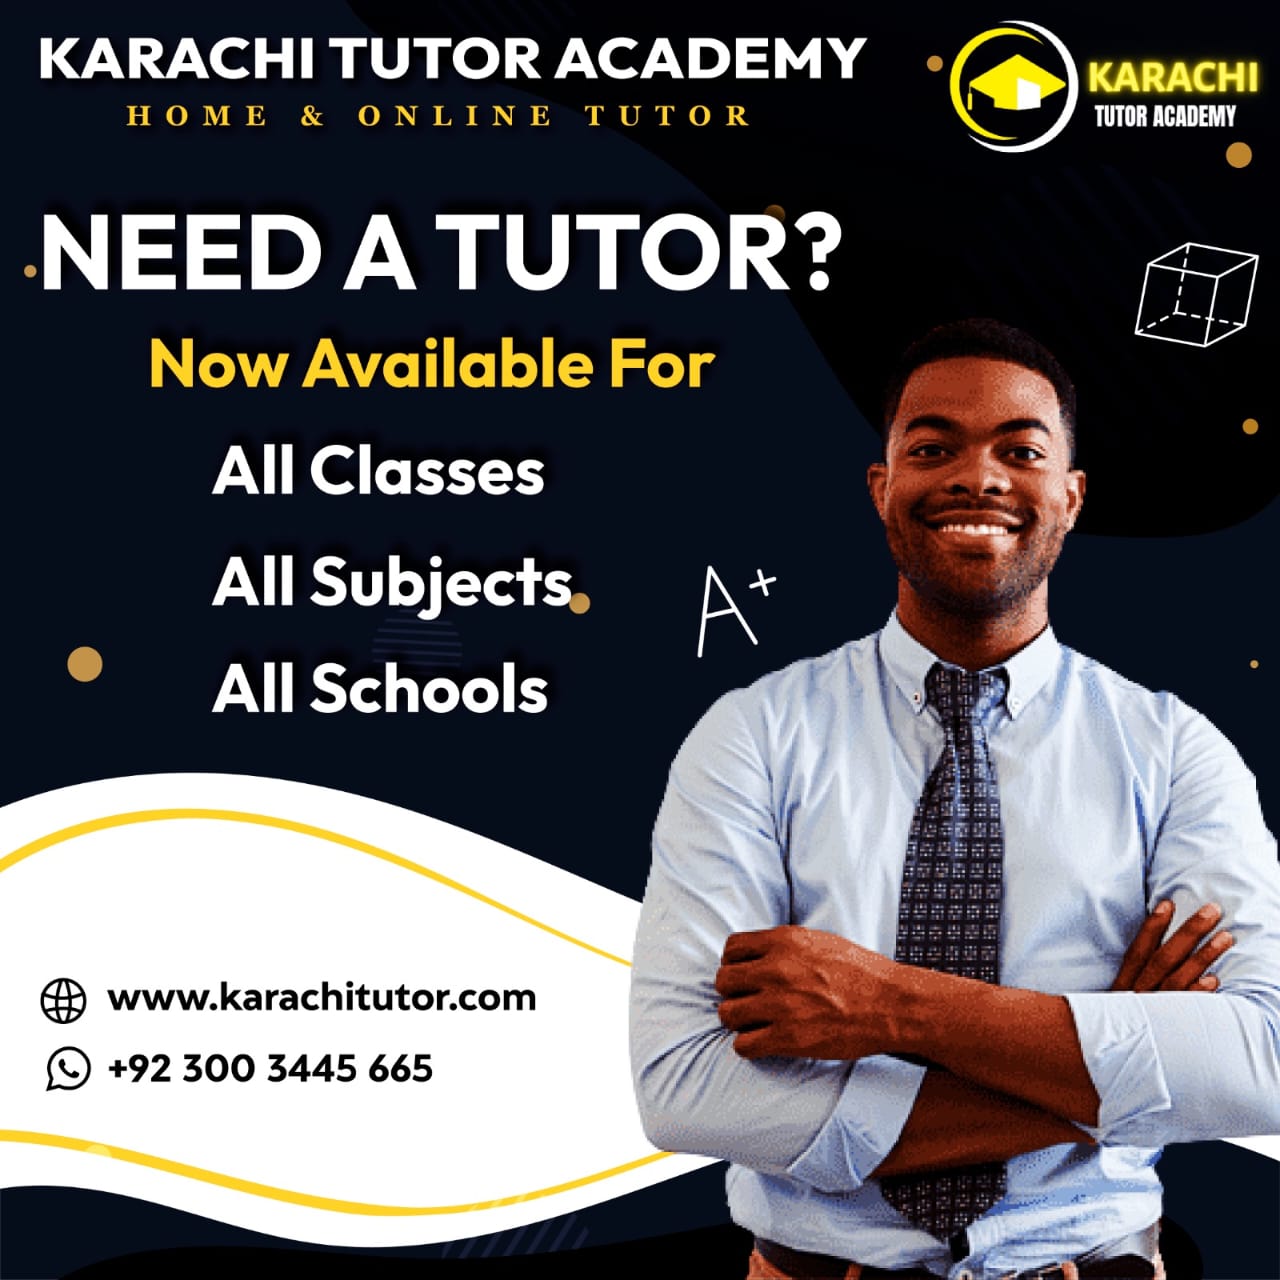 Home Tutor in Karachi: Your Key to Academic Achievement